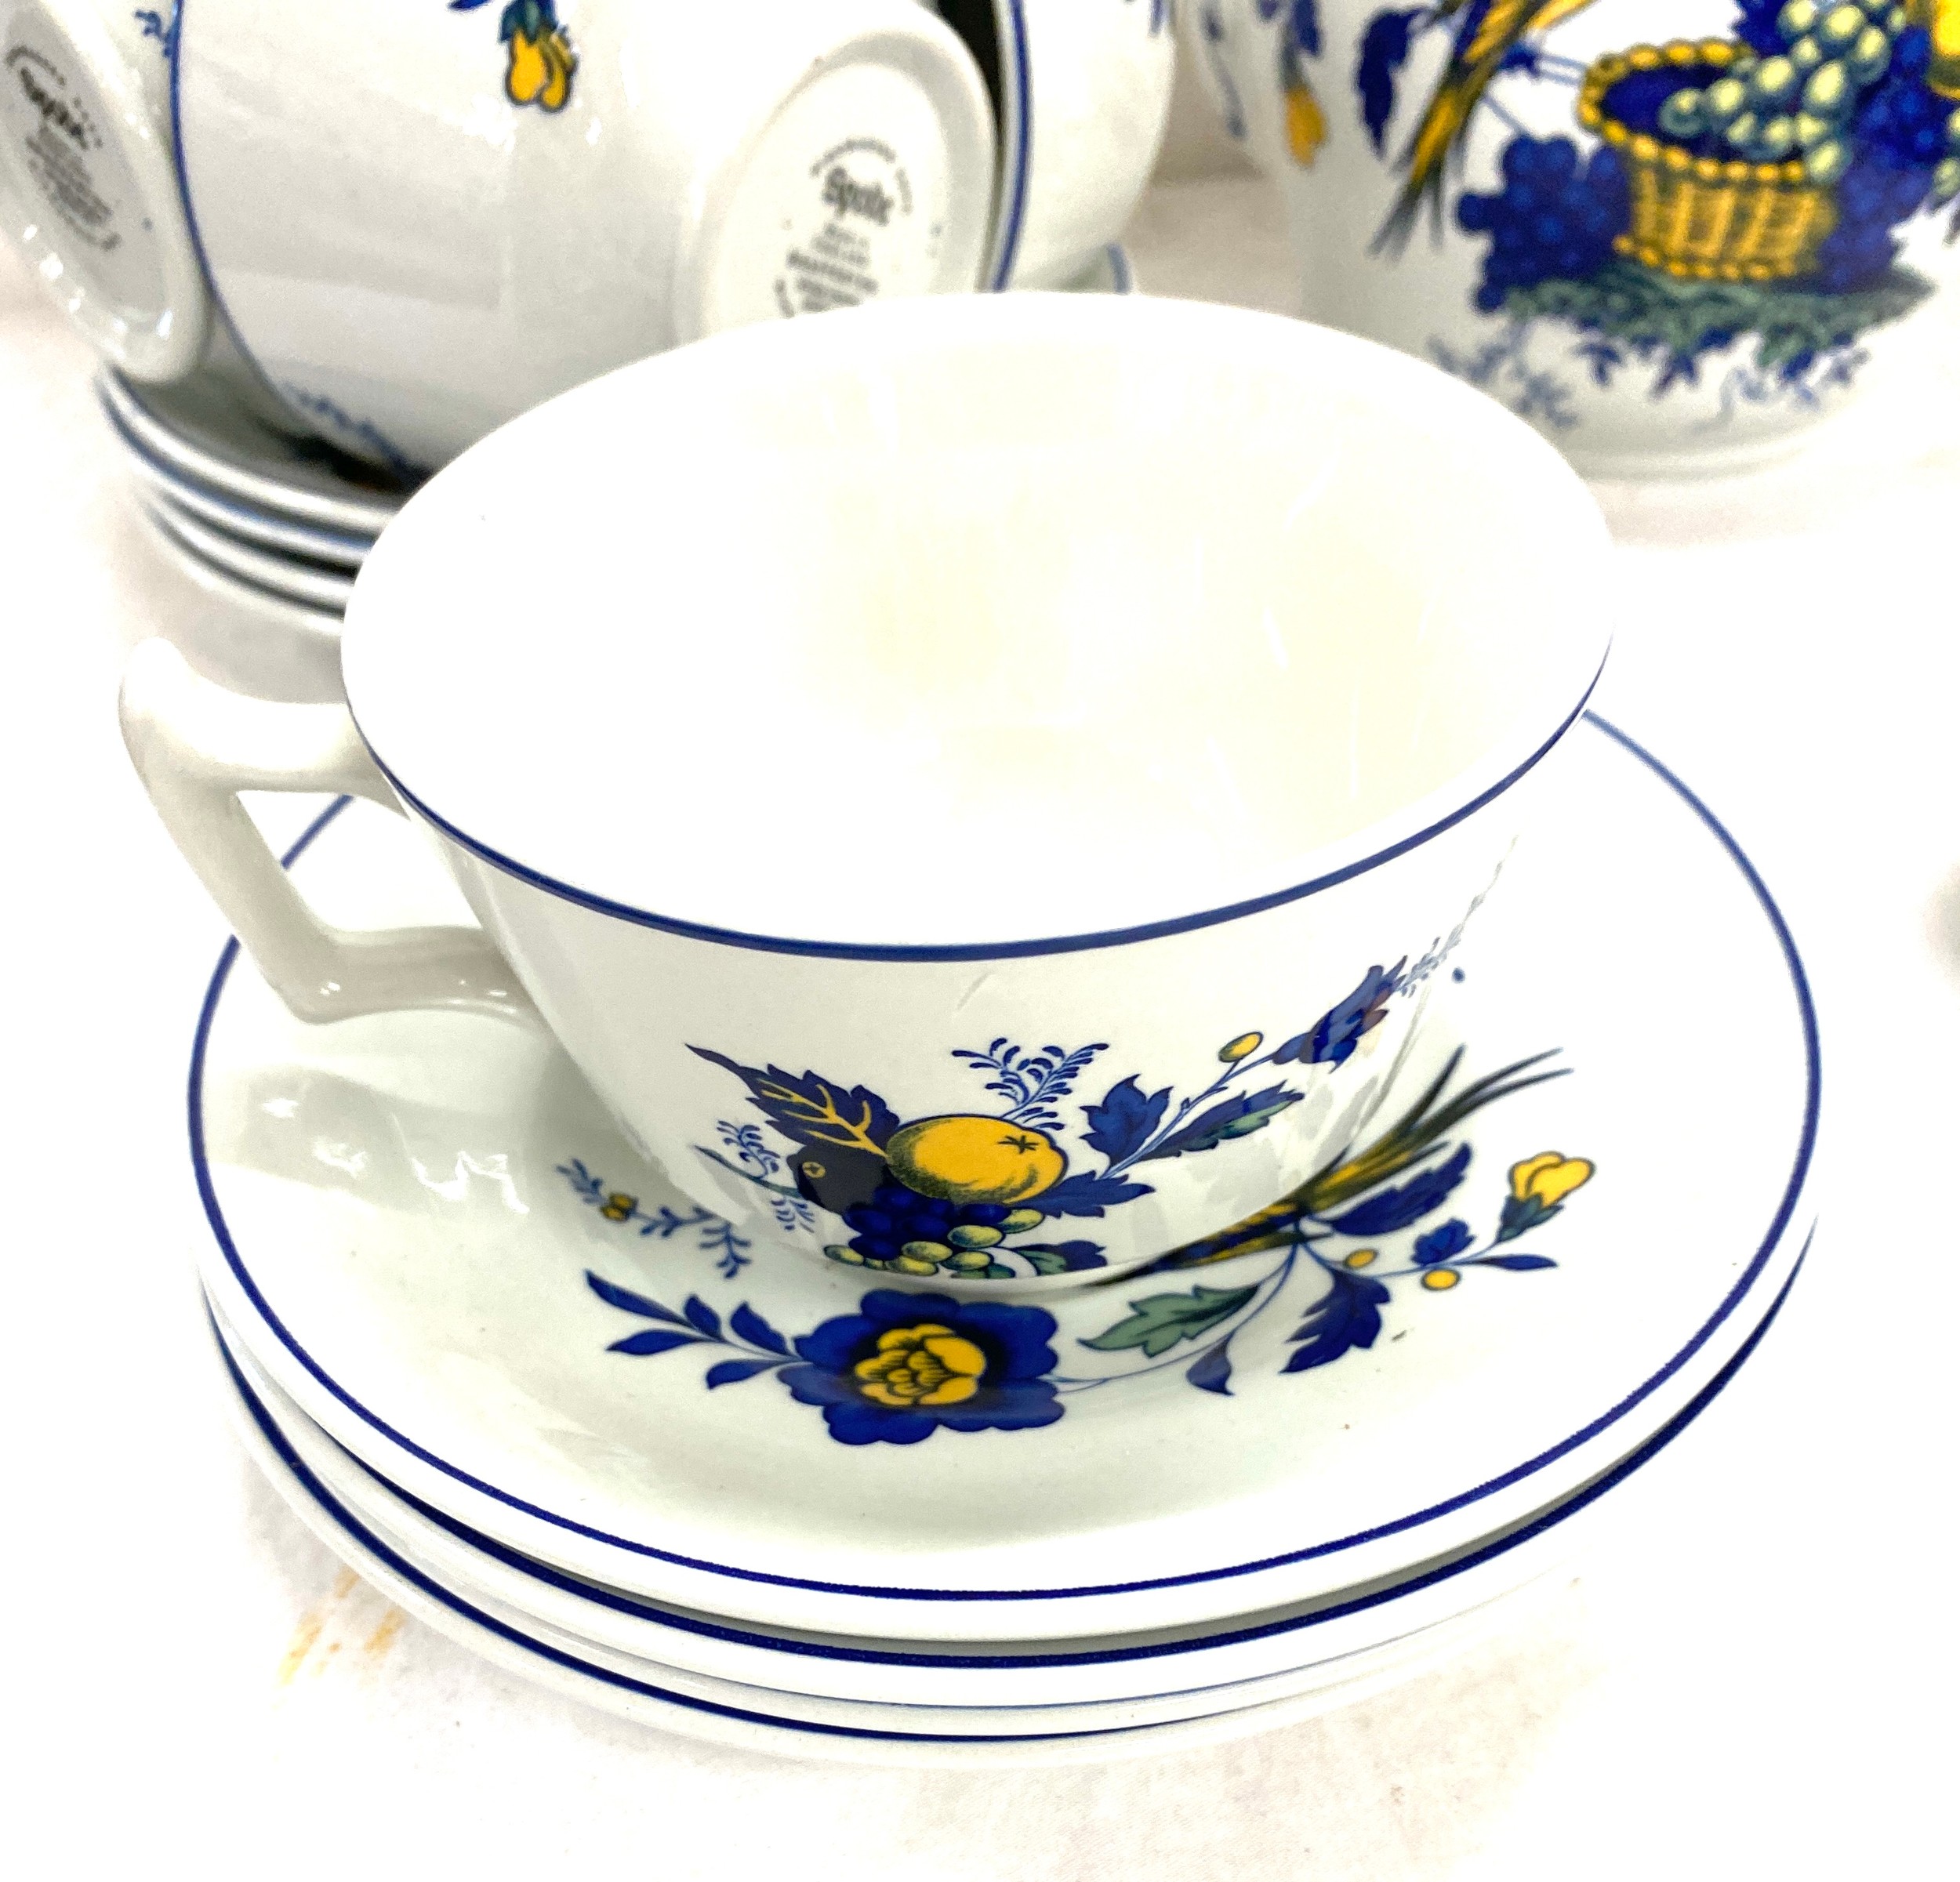 Spode Blue Bird s3274 c1838 - 12 cups 12 saucers 12 sandwich plates, milk jug, coffee pot - Image 2 of 5